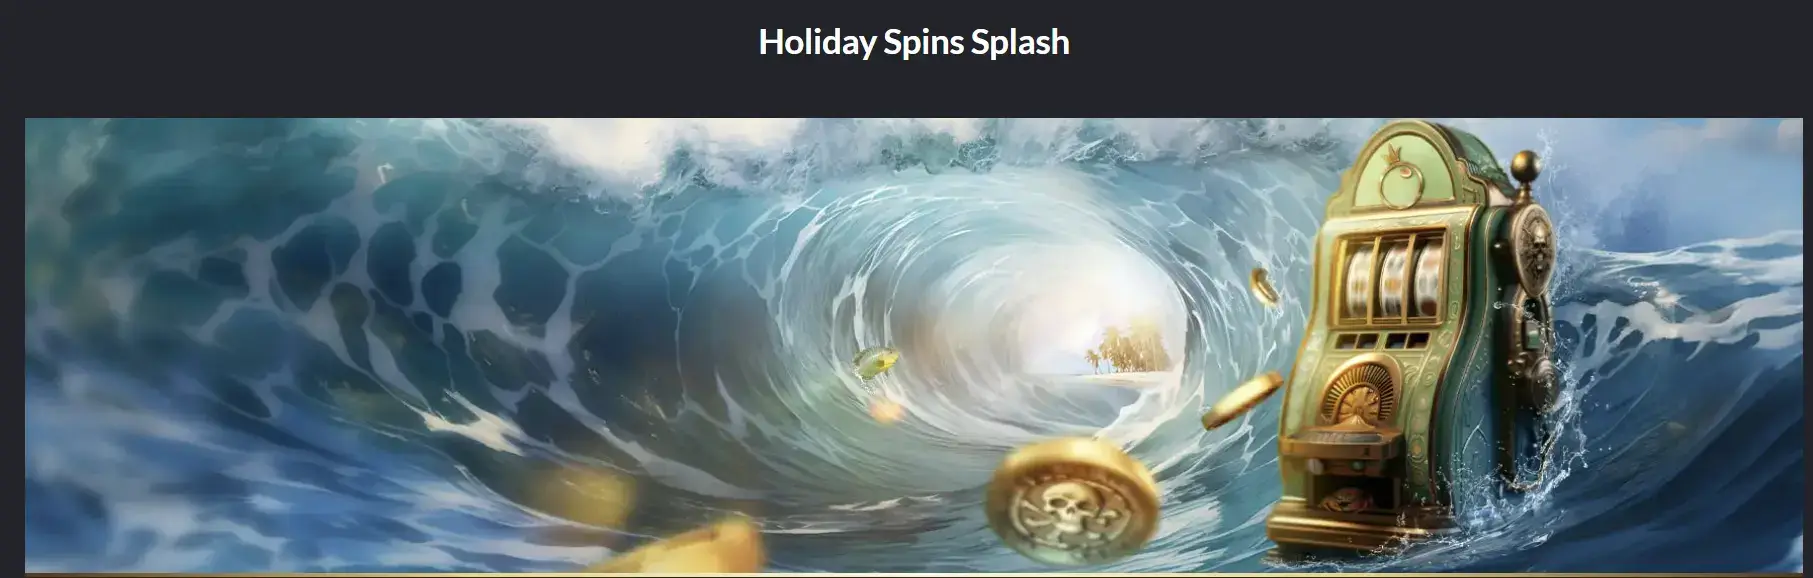 holiday_splash_bonus_tortuga